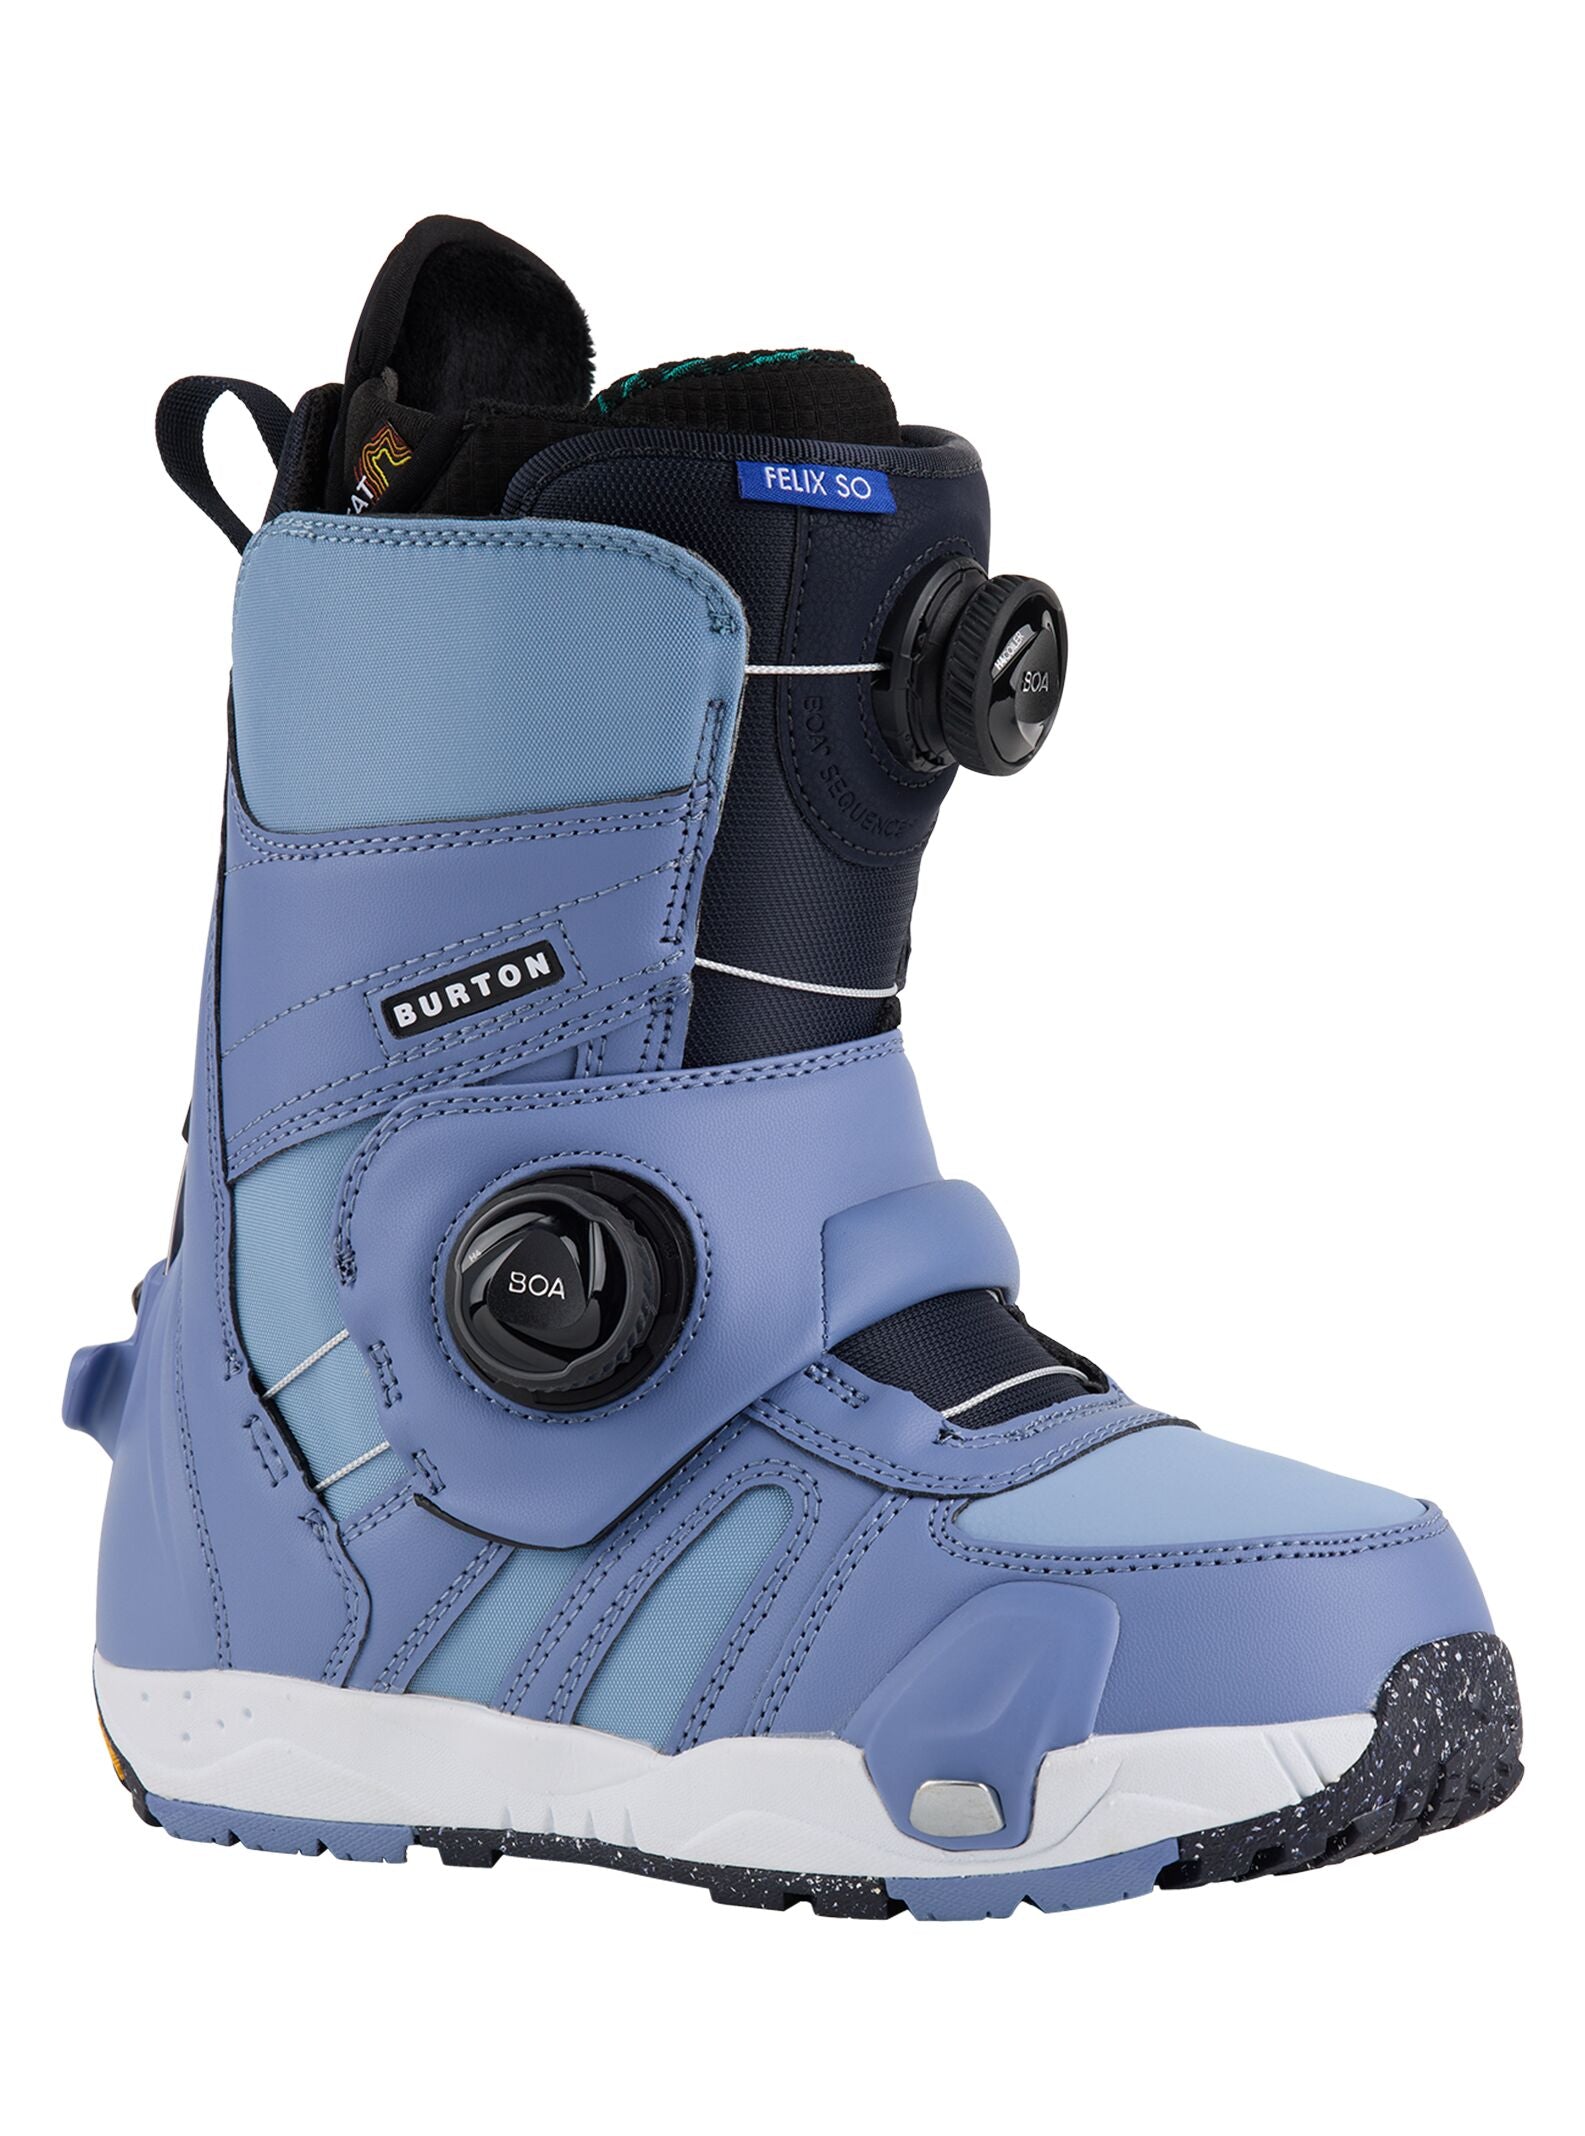 Burton Photon Step On Wide Snowboard Boots 2024 –